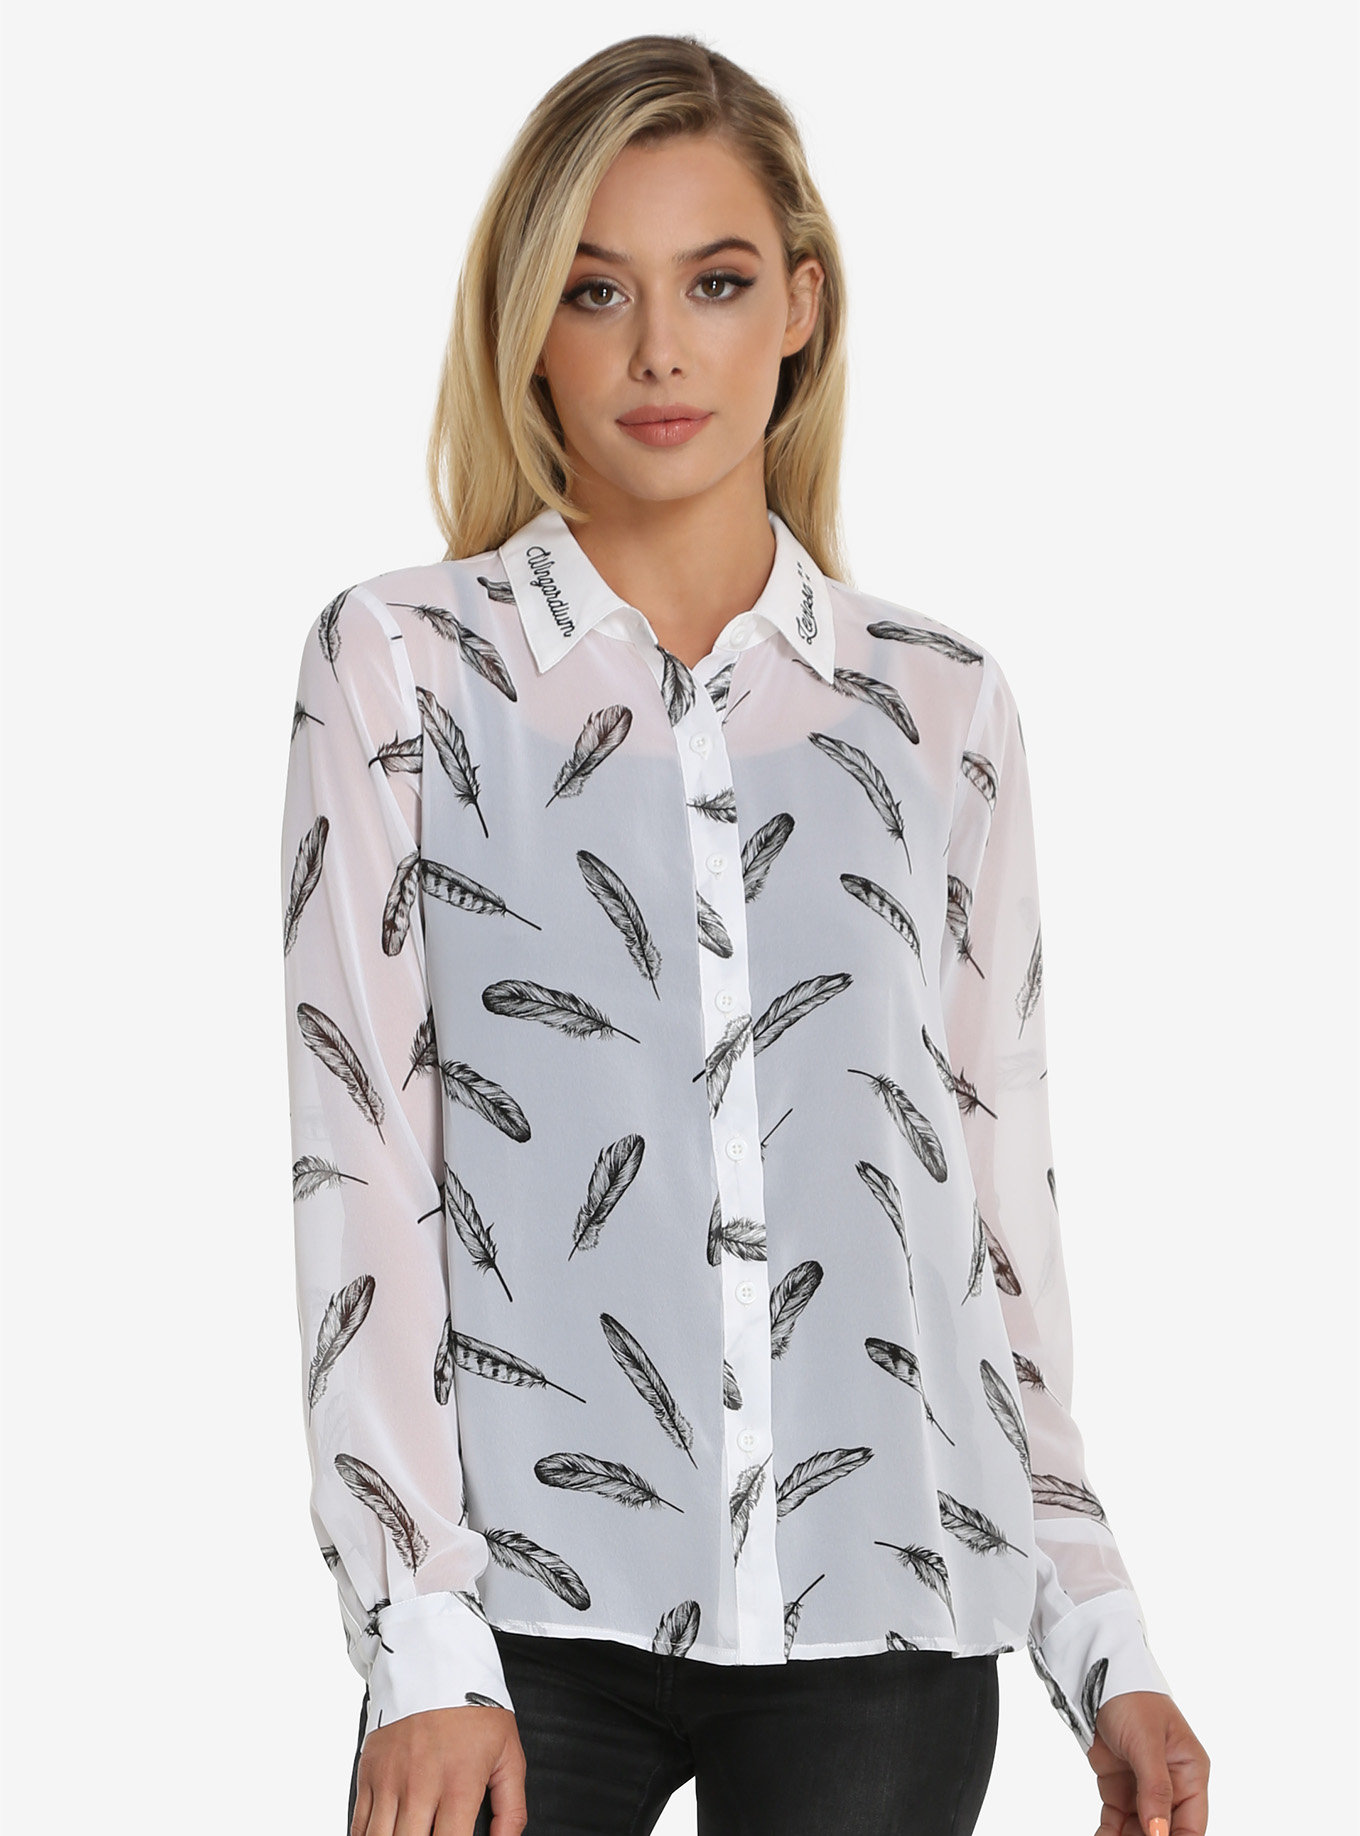 Wingardium Leviosa blouse.jpg